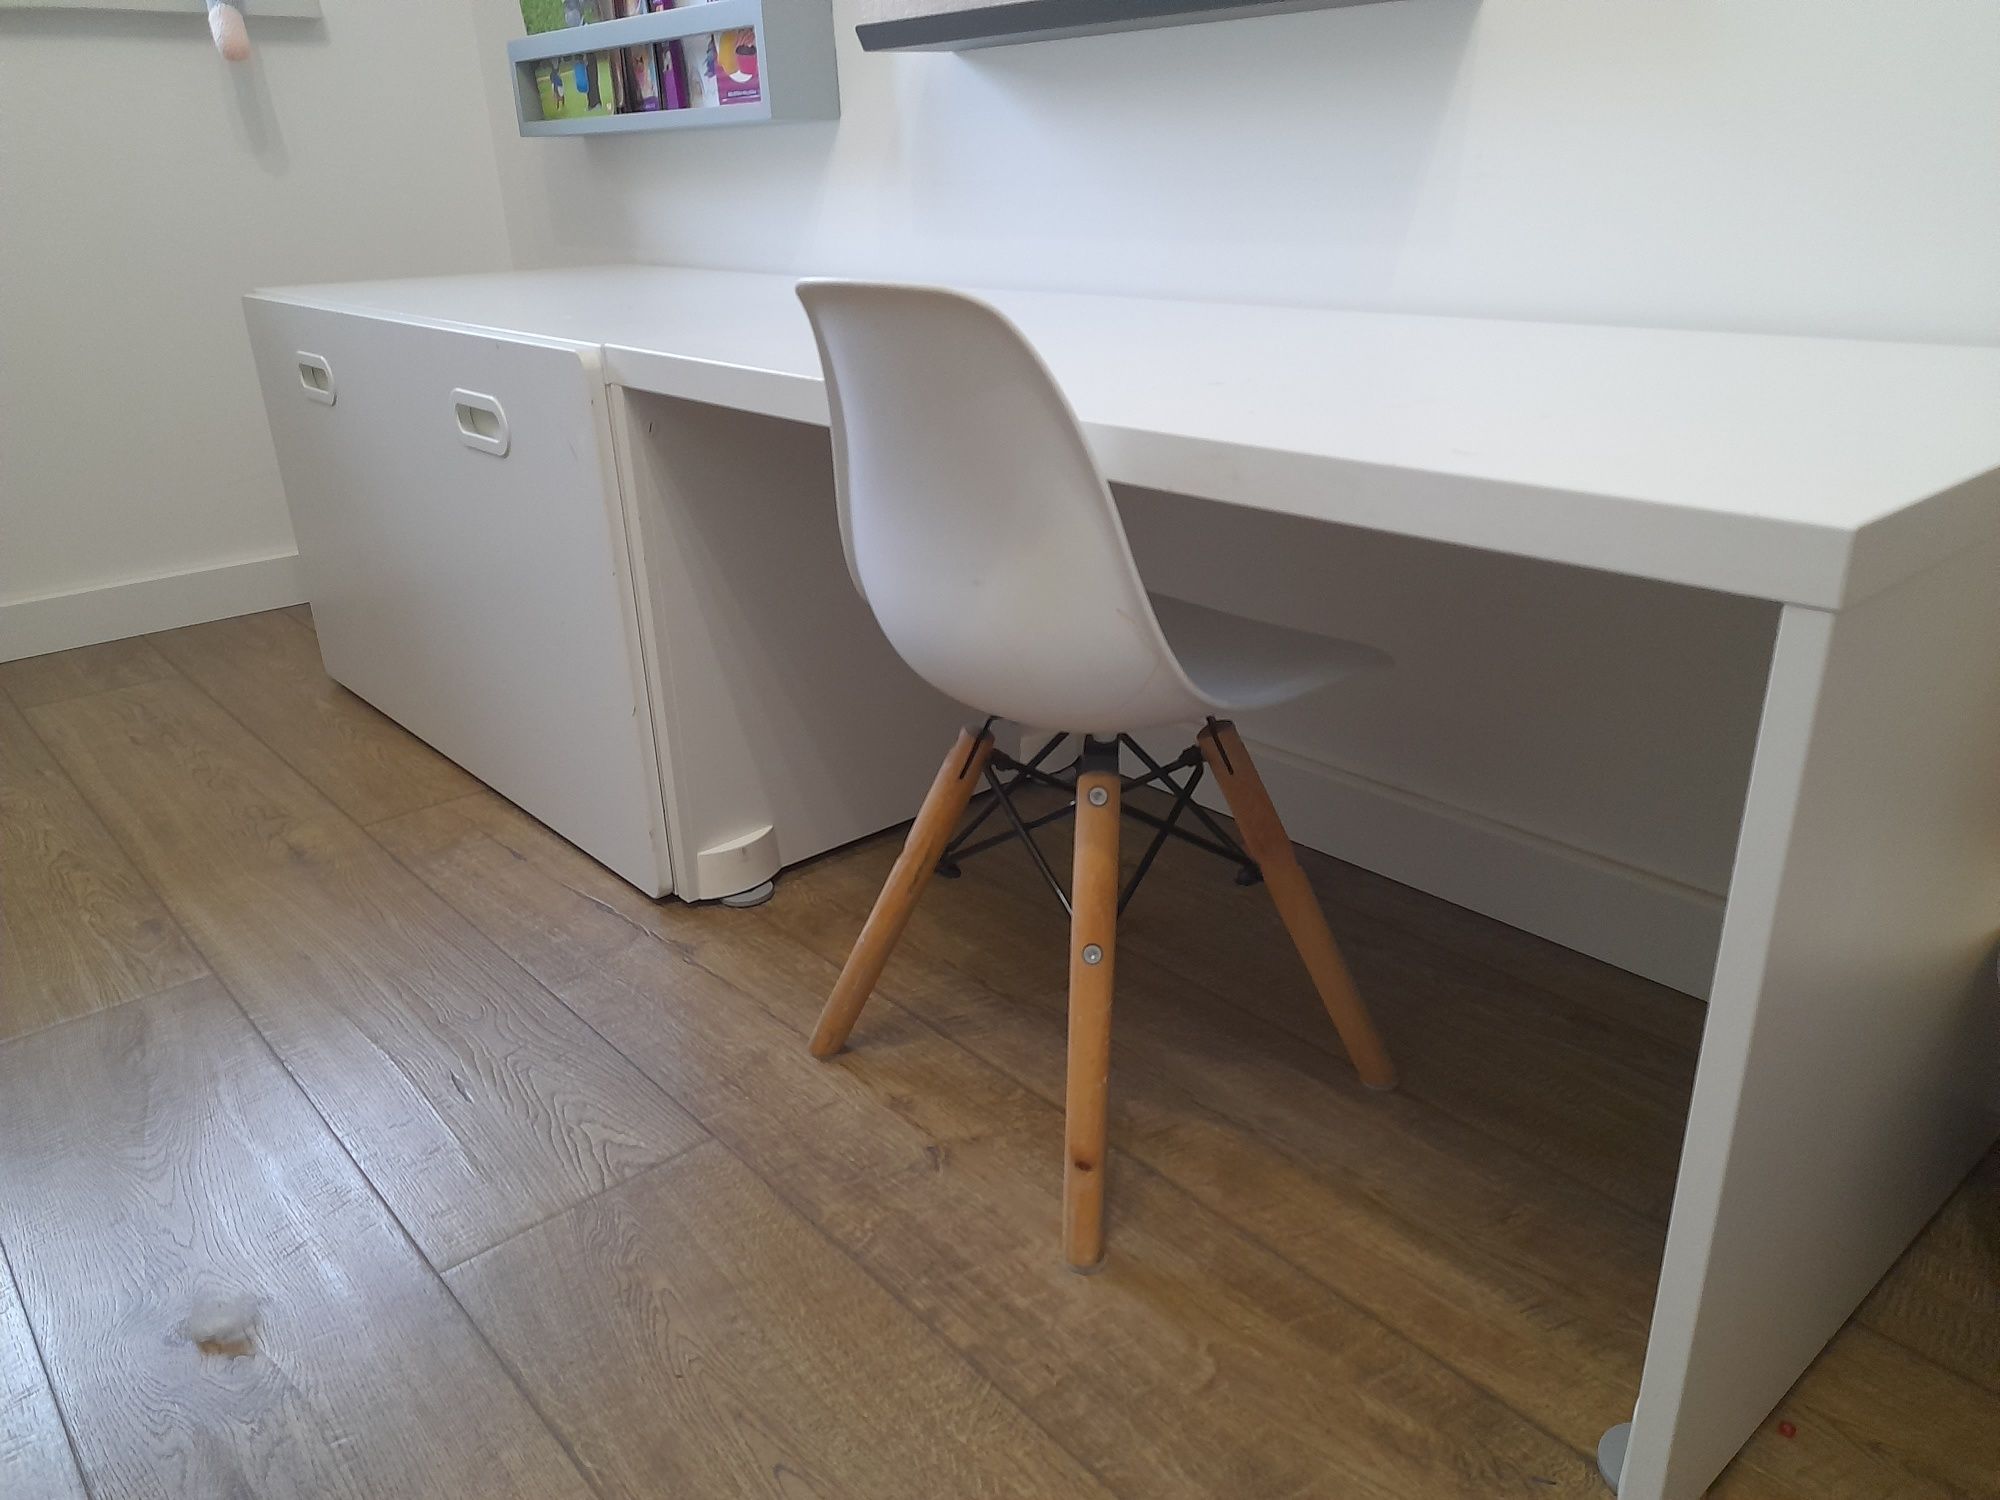 Biurko i skrzynia ikea model stuva + gratis krzesełko